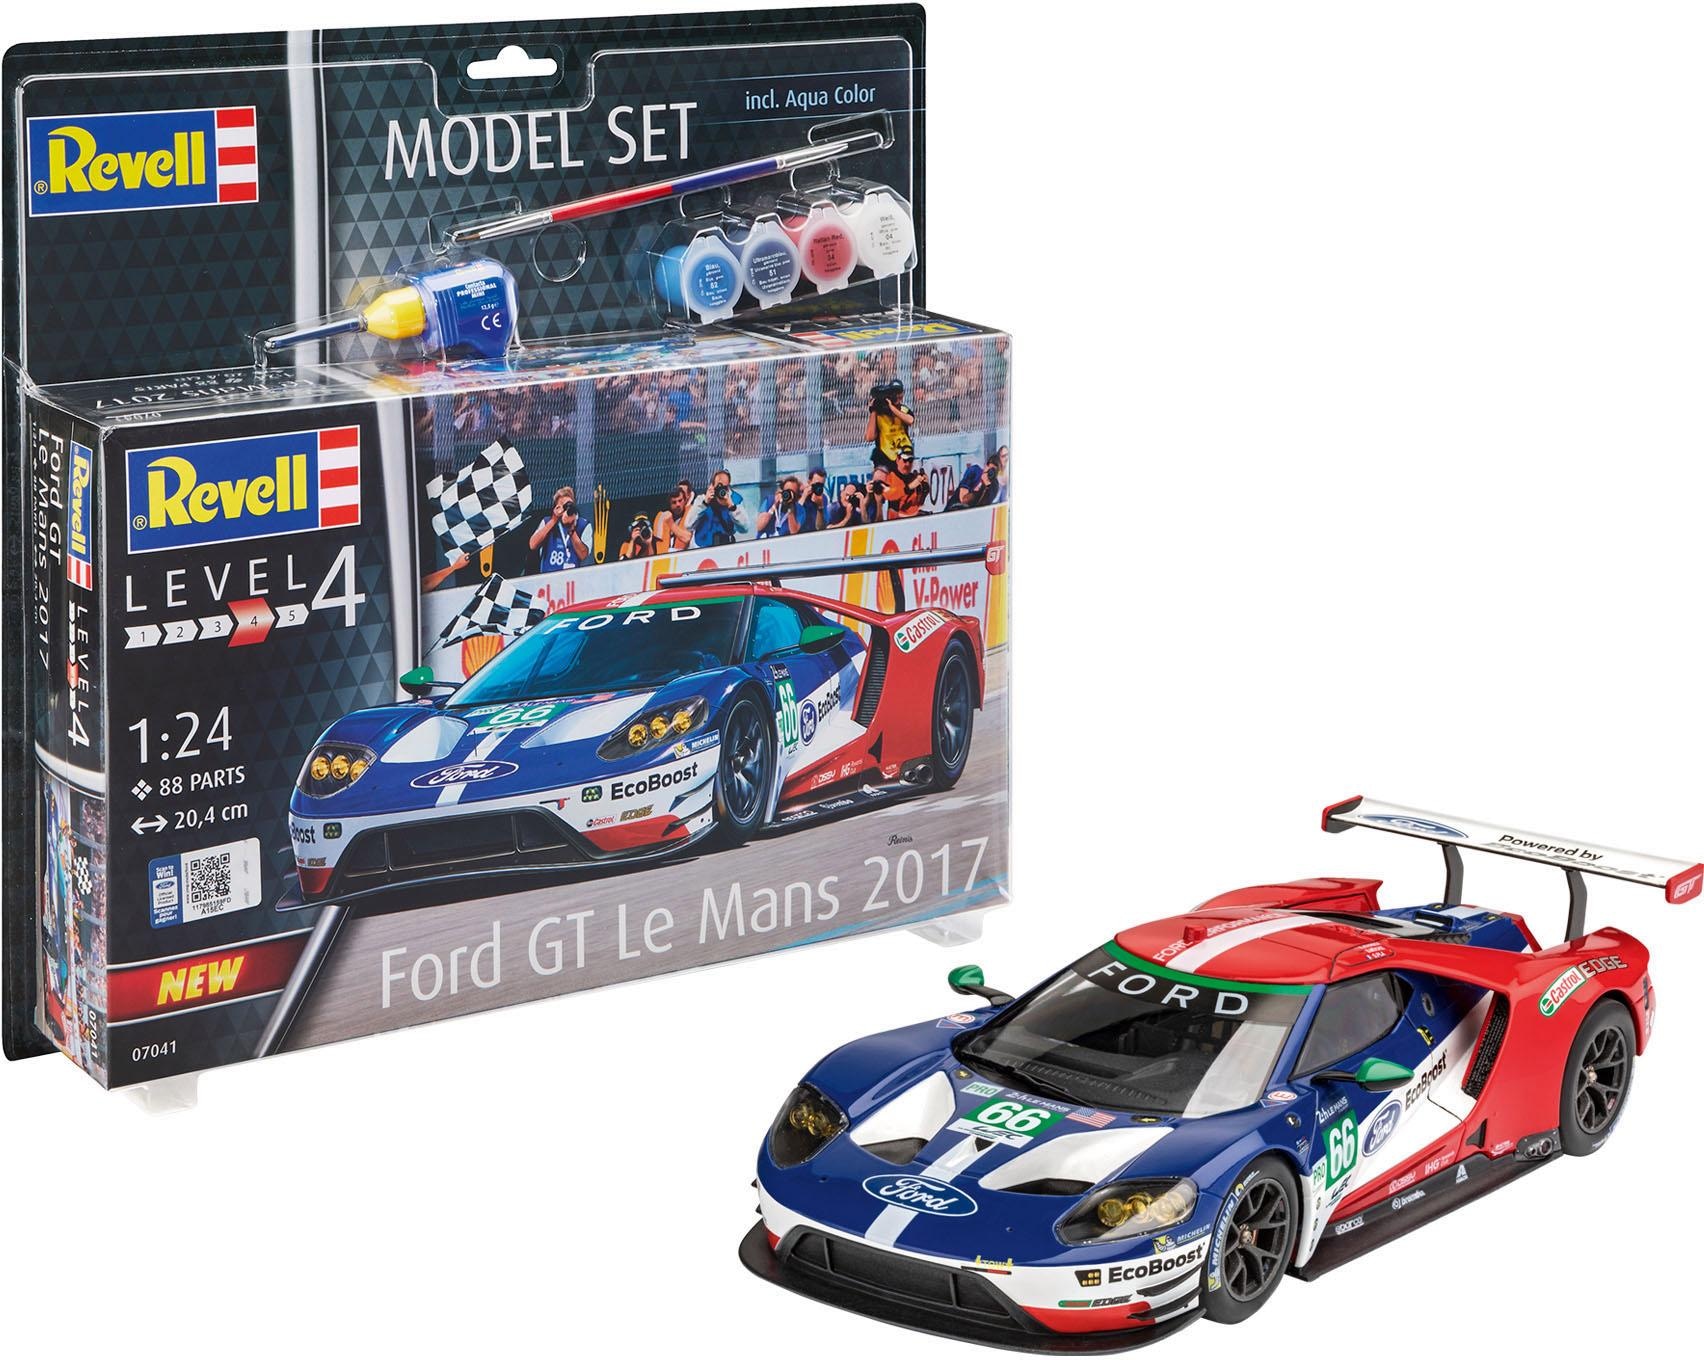 Modellbausatz »Ford GT - Le Mans 2017«, 1:24